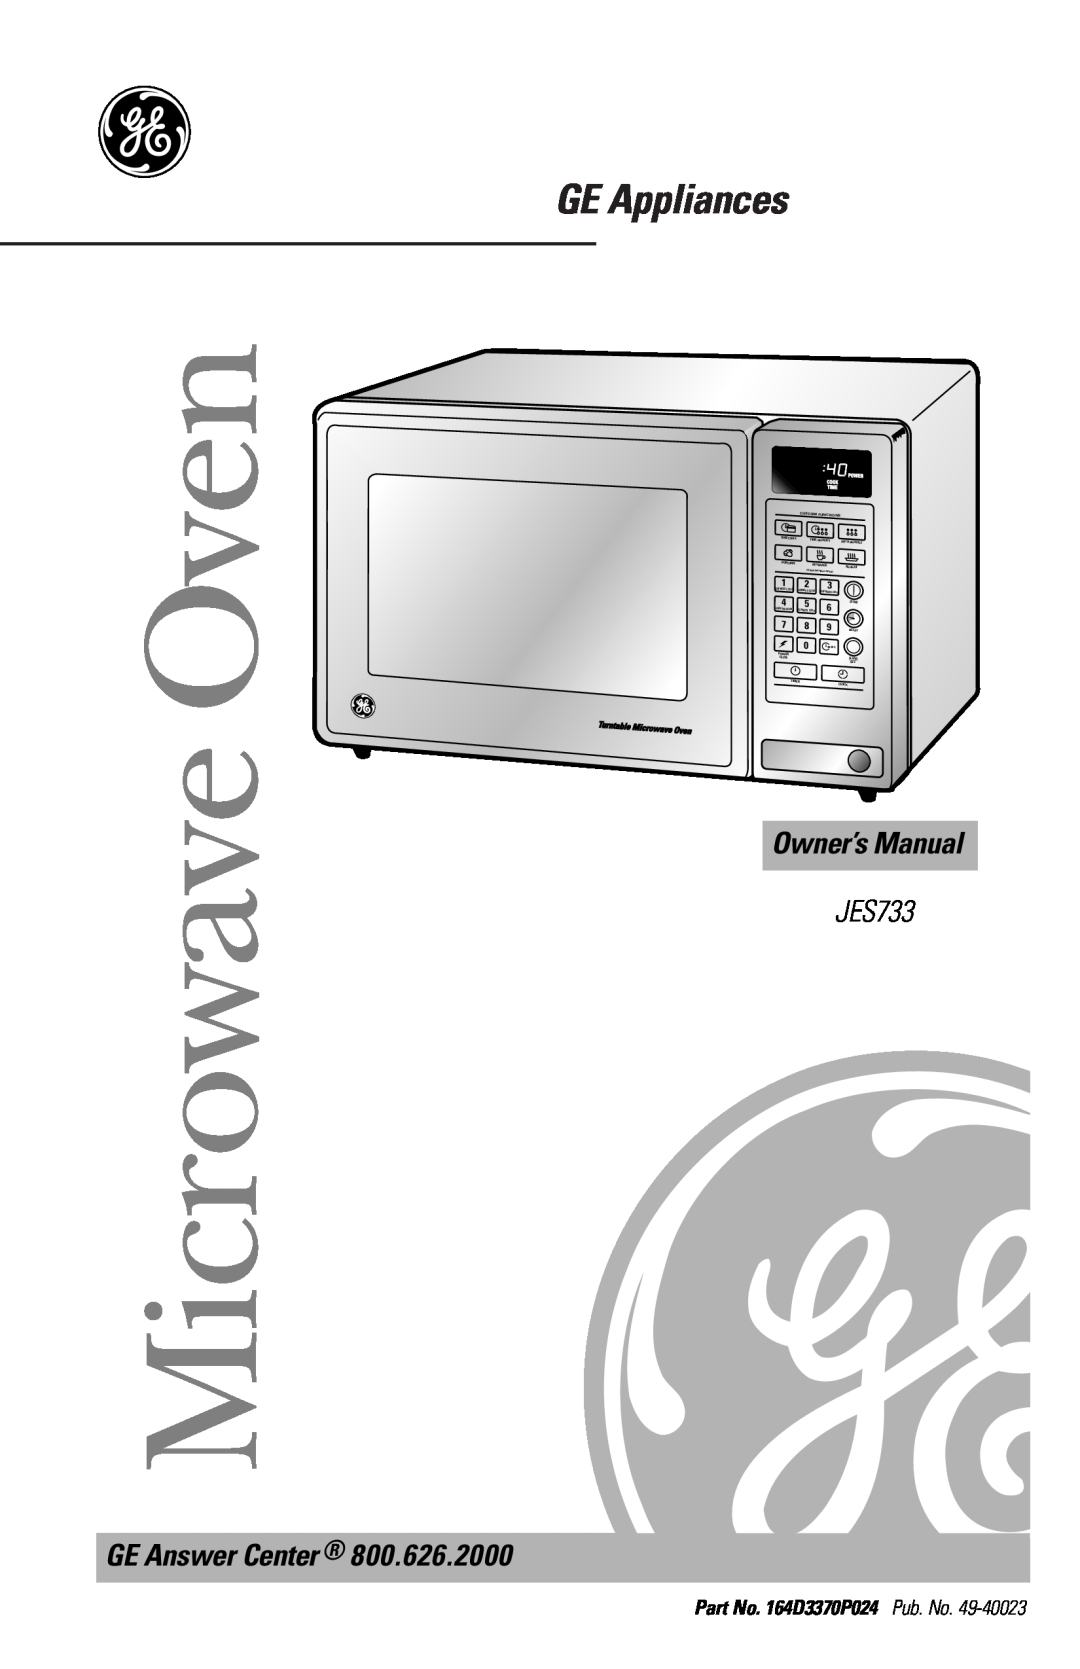 GE JES733 owner manual GE Appliances, GE Answer Center, Microwave Oven, Part No. 164D3370P024 Pub. No 